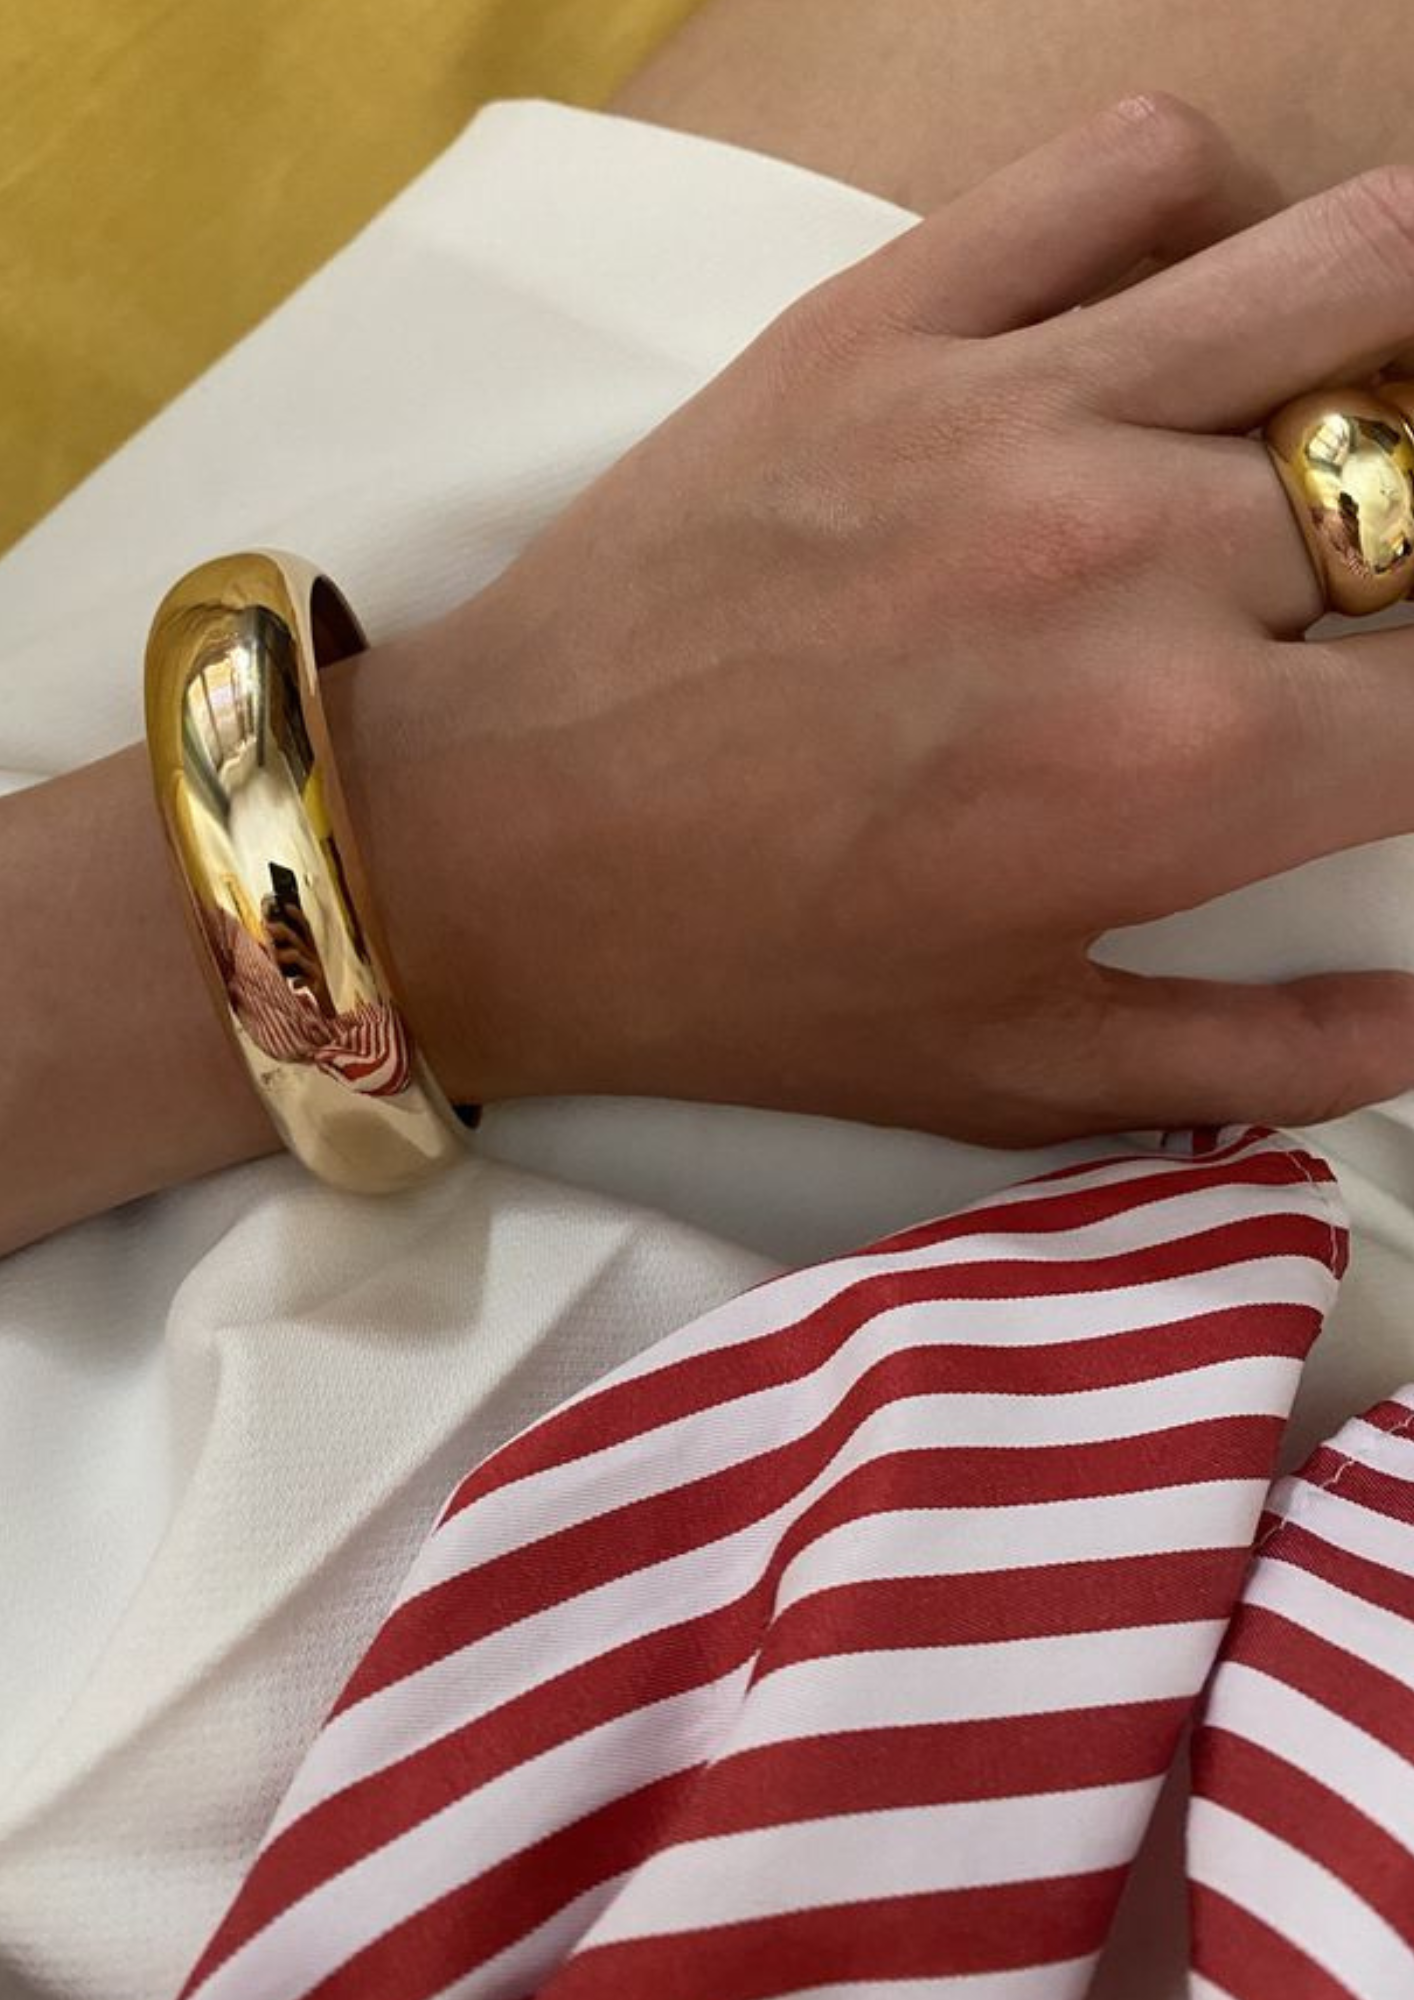 Gold Solid Bangle Cuff Bracelet